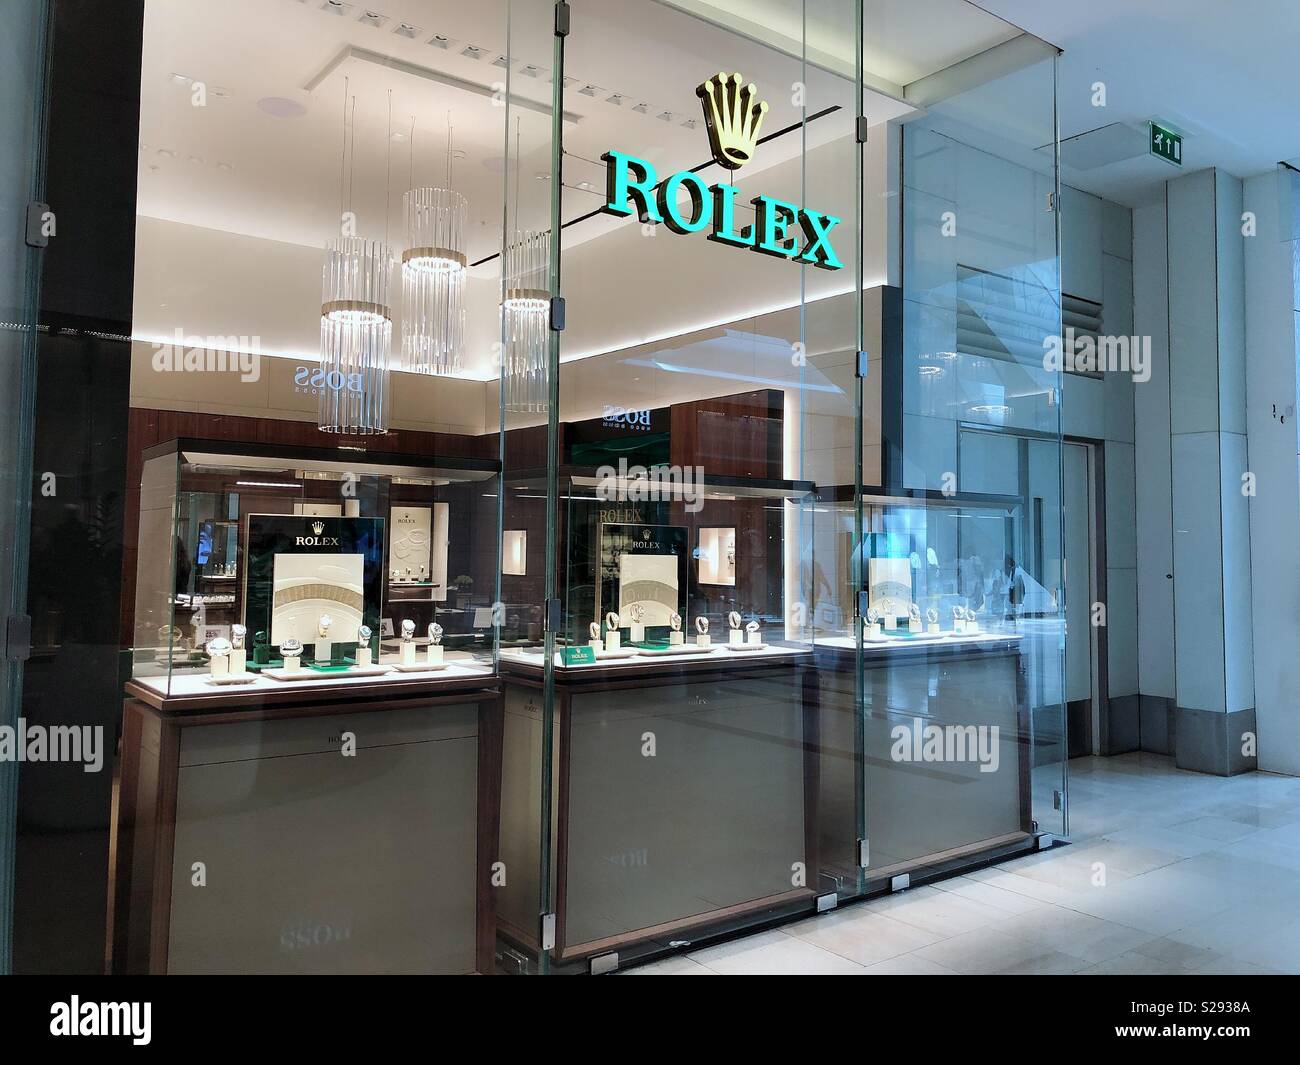 Rolex shop London Uk shopping center 